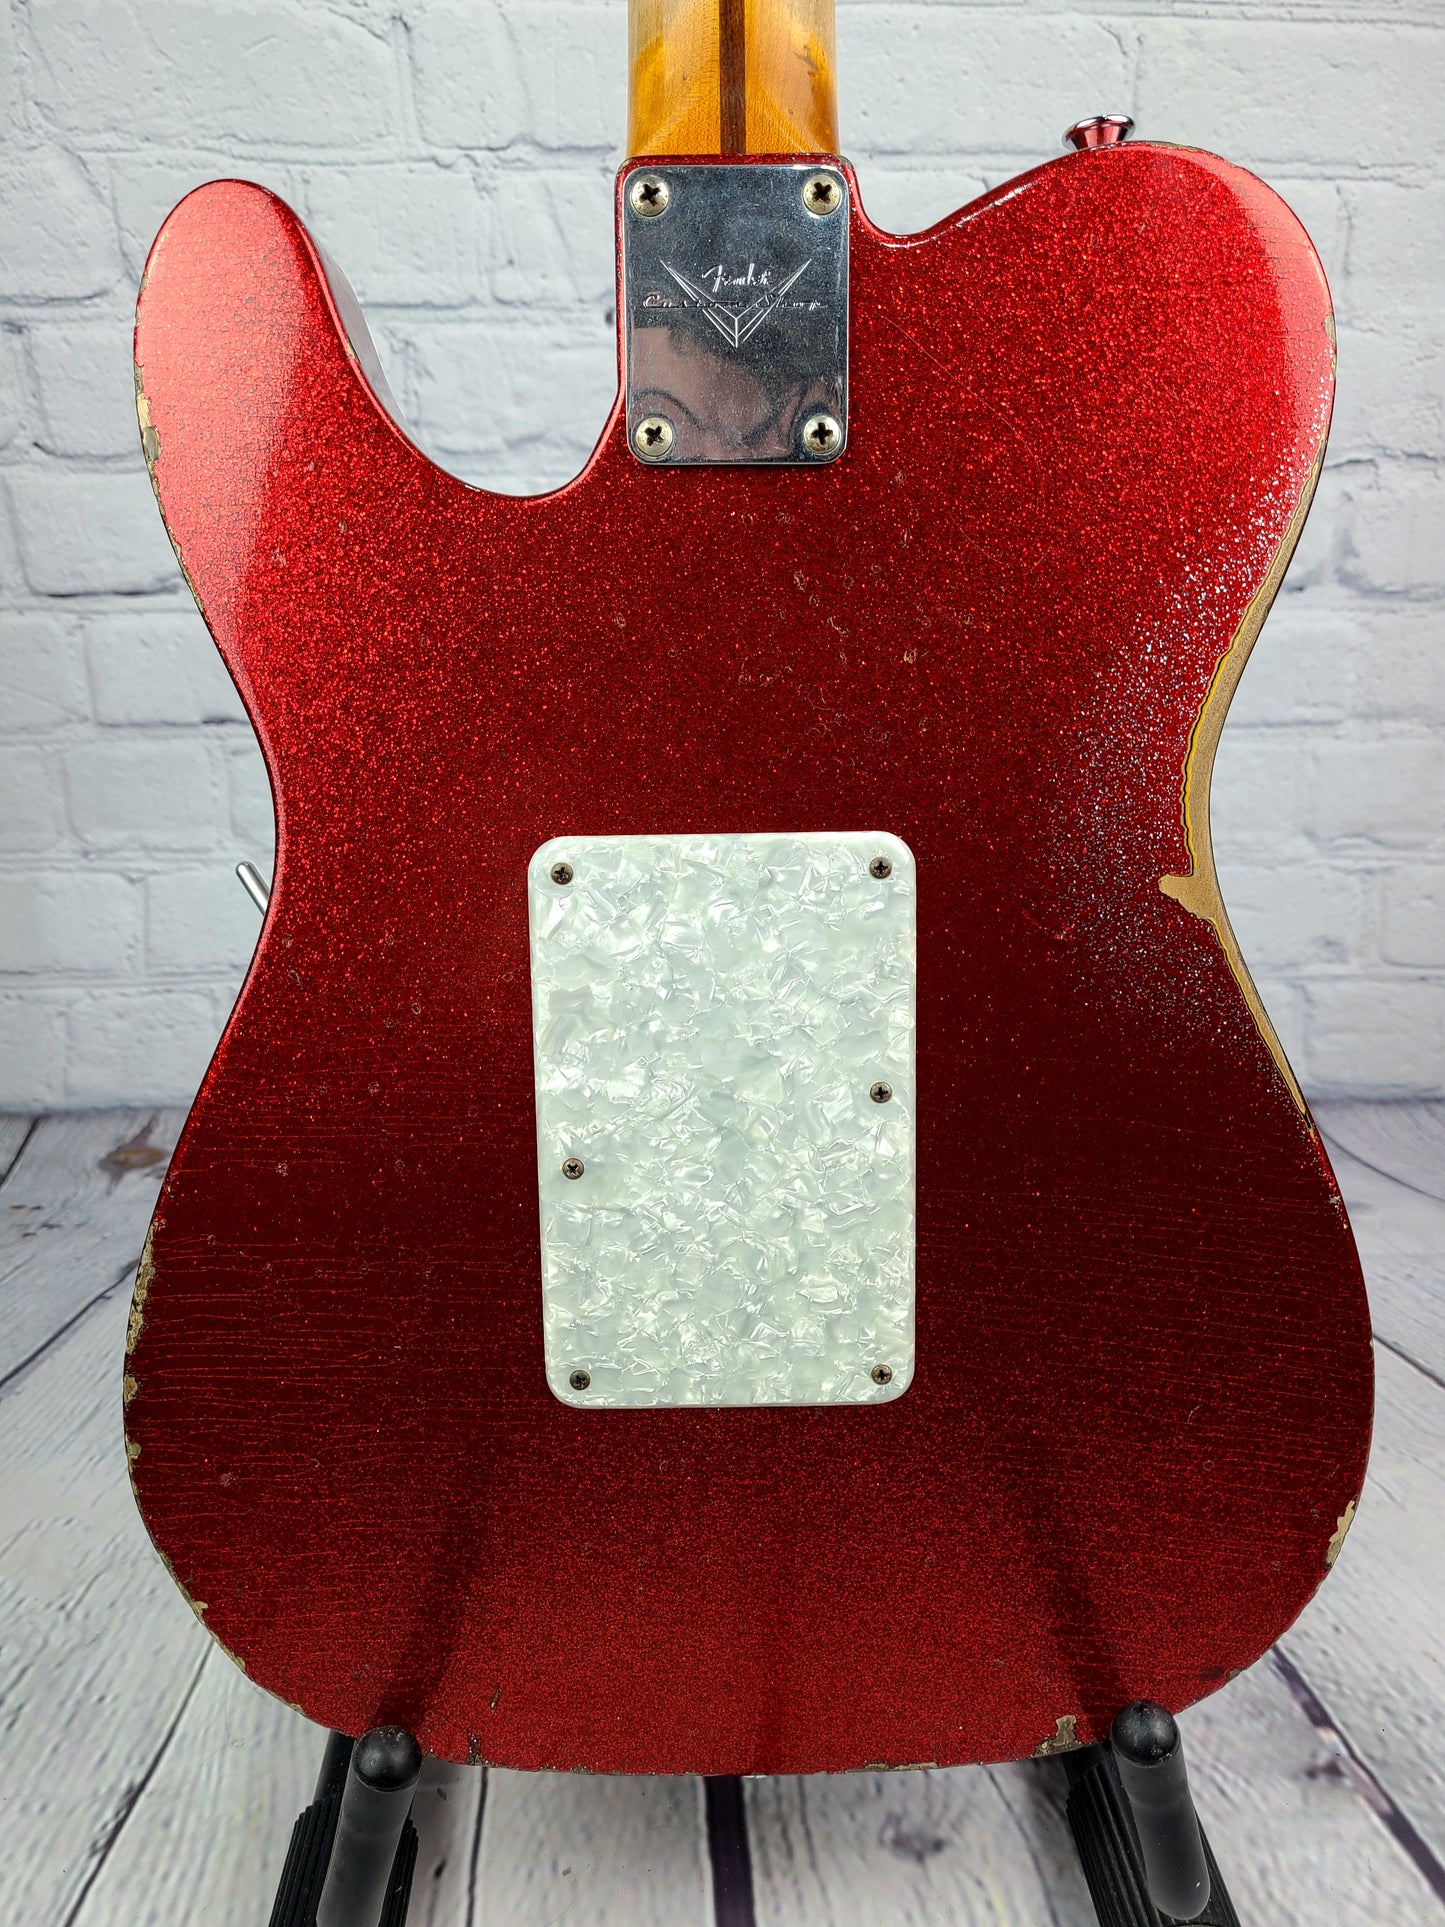 USED Fender John Cruz Master Built Custom Shop Telecaster 2009 Floyd Rose Red Sparkle Over 3TSB